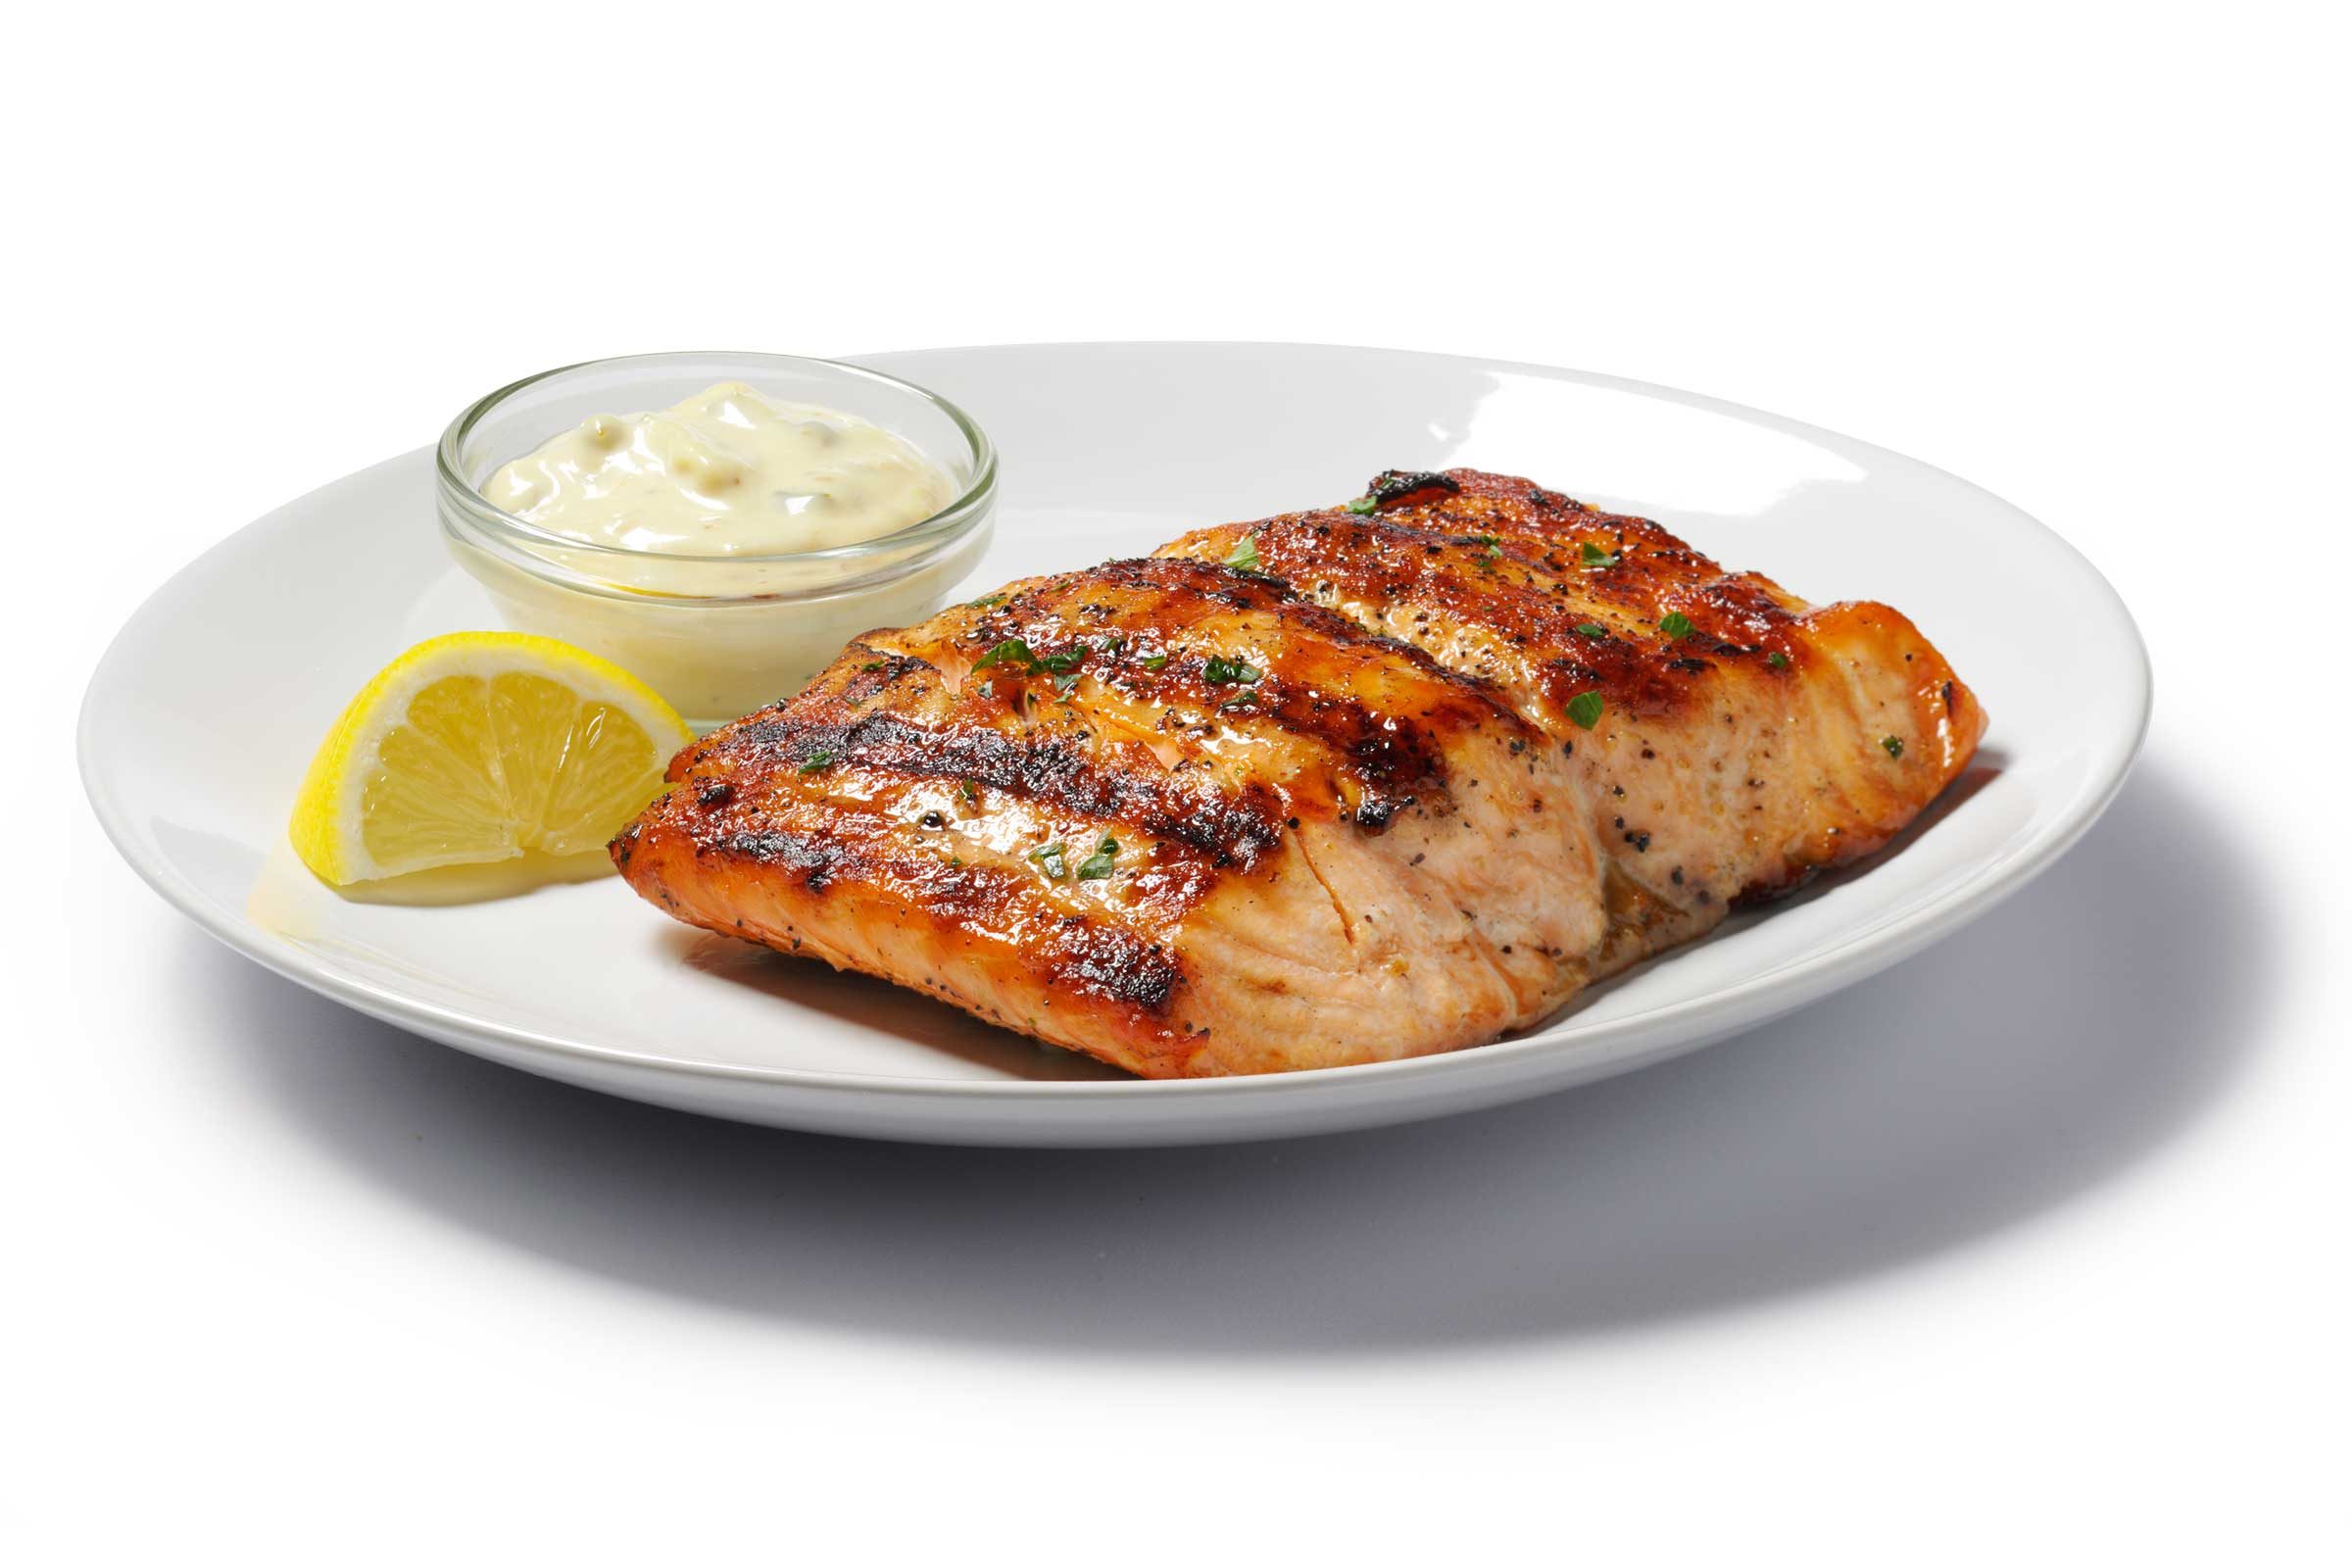 Healthy Restaurant Foods: Low-Calorie Restaurant Meals | Reader's Digest